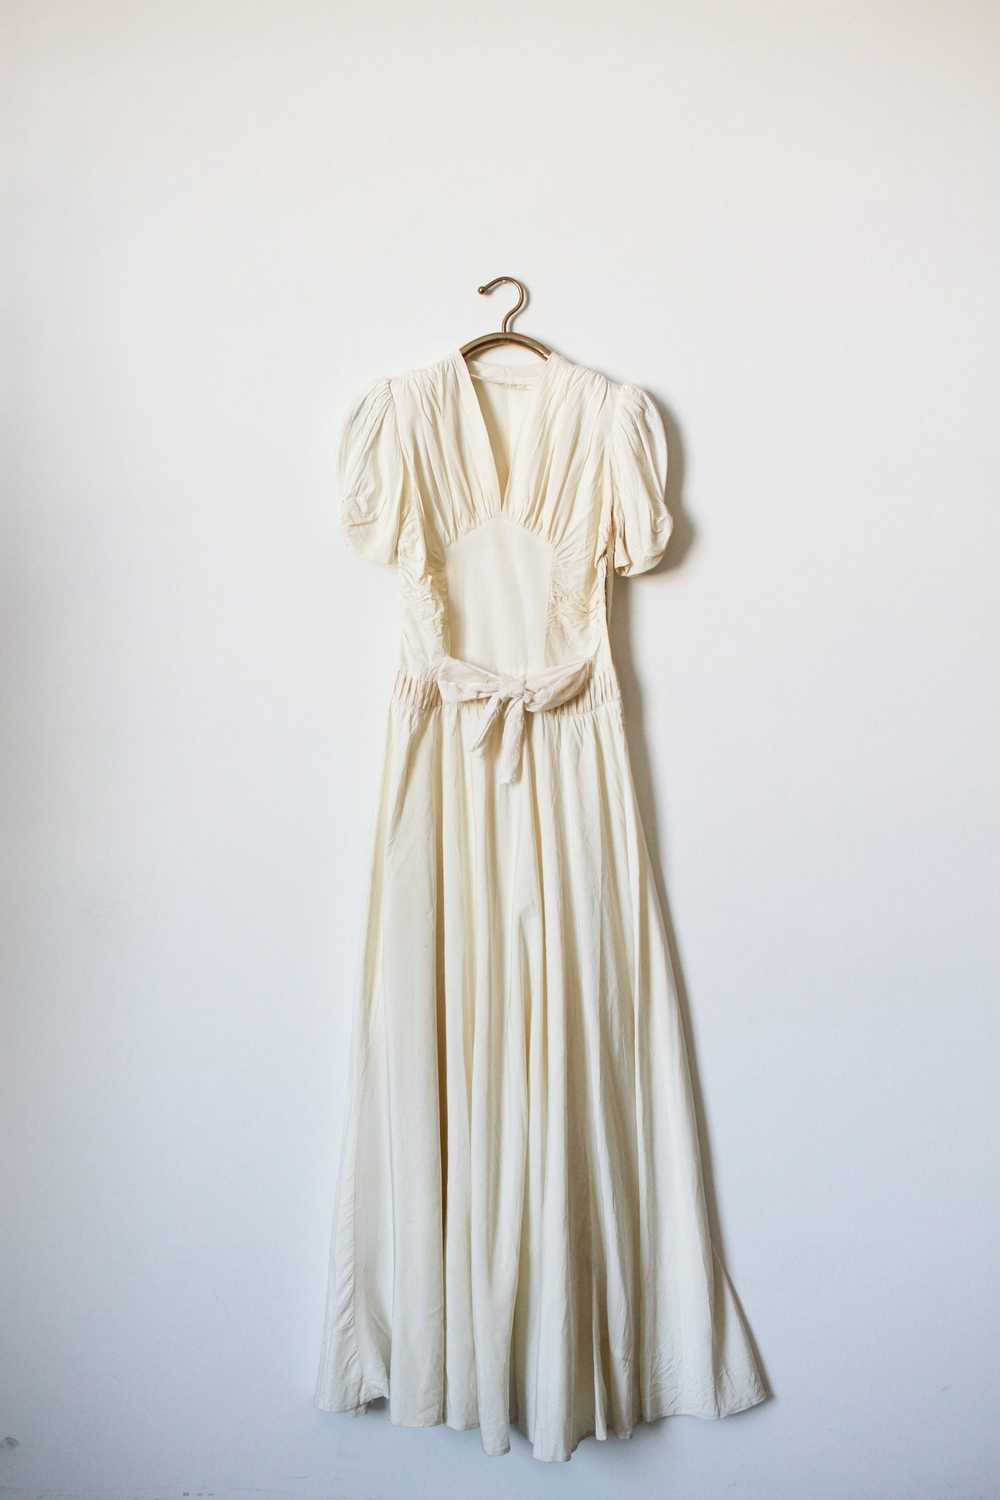 1940s White Taffeta Cap Sleeve Gown - image 2